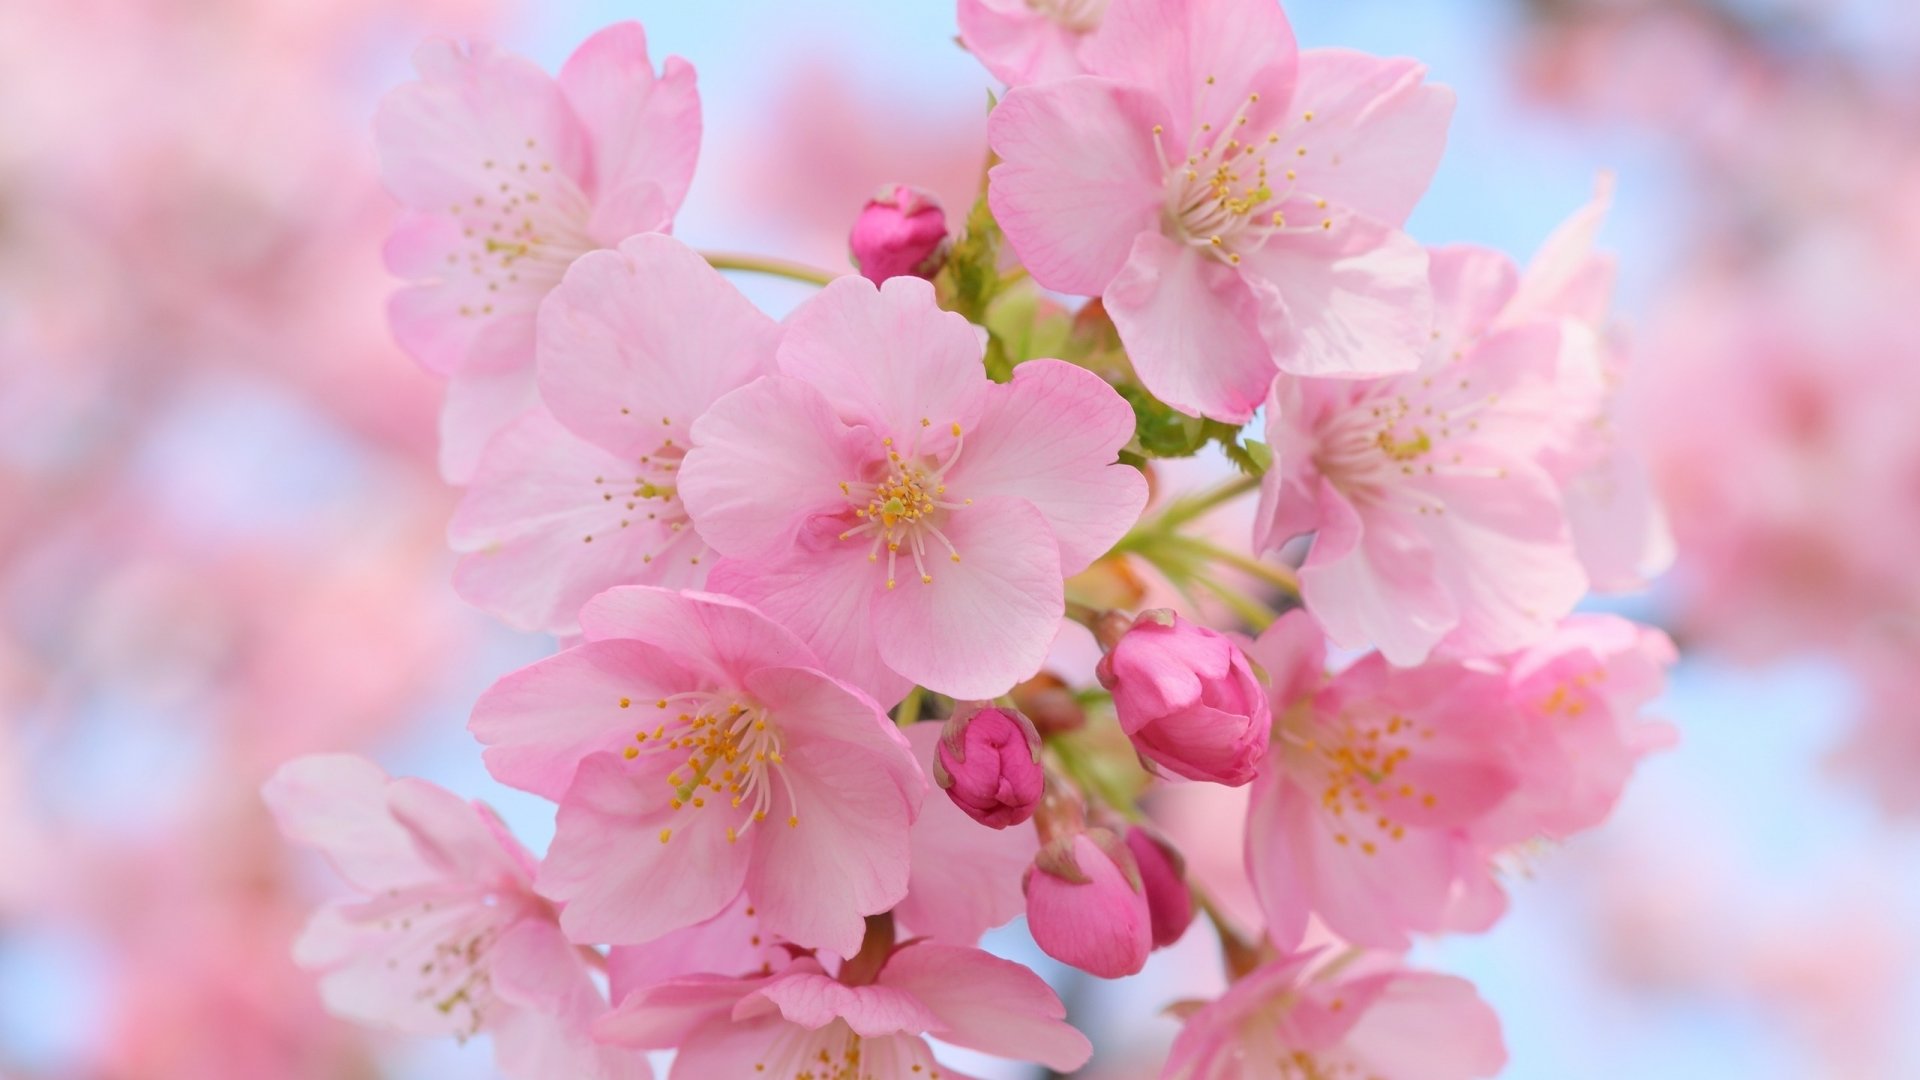 Sakura Tree Cherry Blossom Wallpapers 1920x1080 Full Hd 1080p Desktop Backgrounds